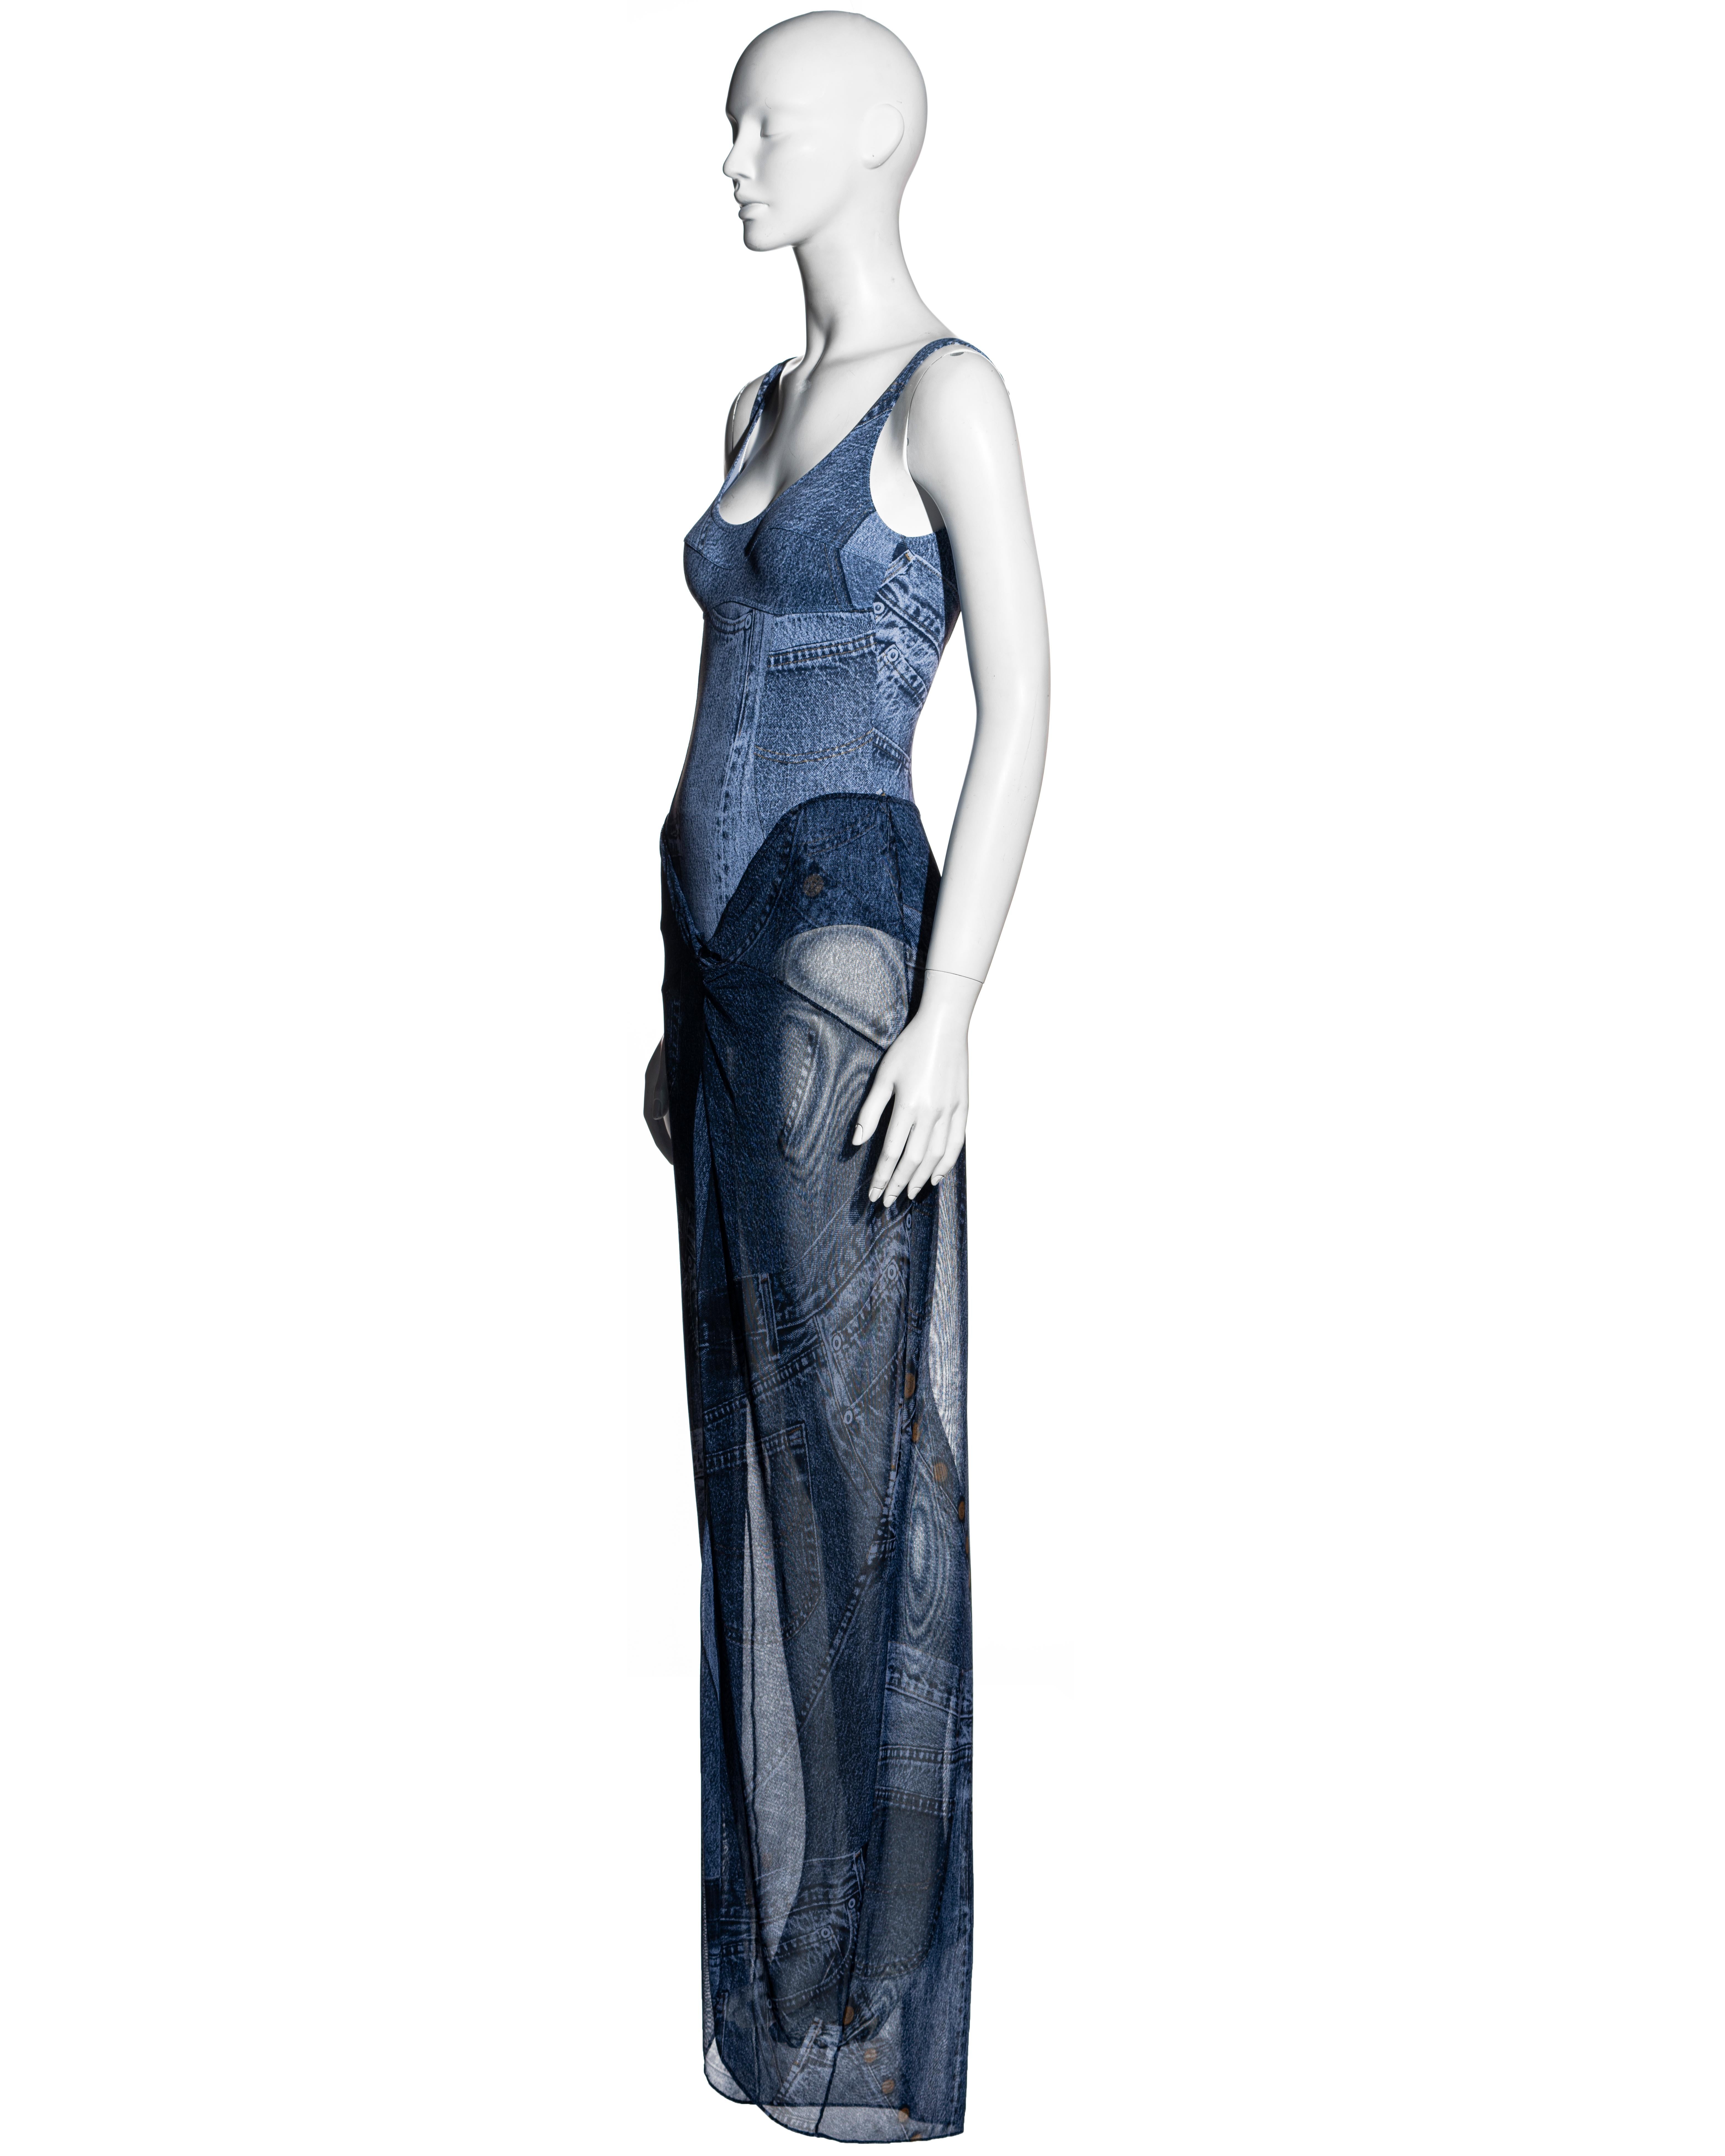 Christian Dior by John Galliano denim print bodysuit and sarong skirt, ss 2002 2